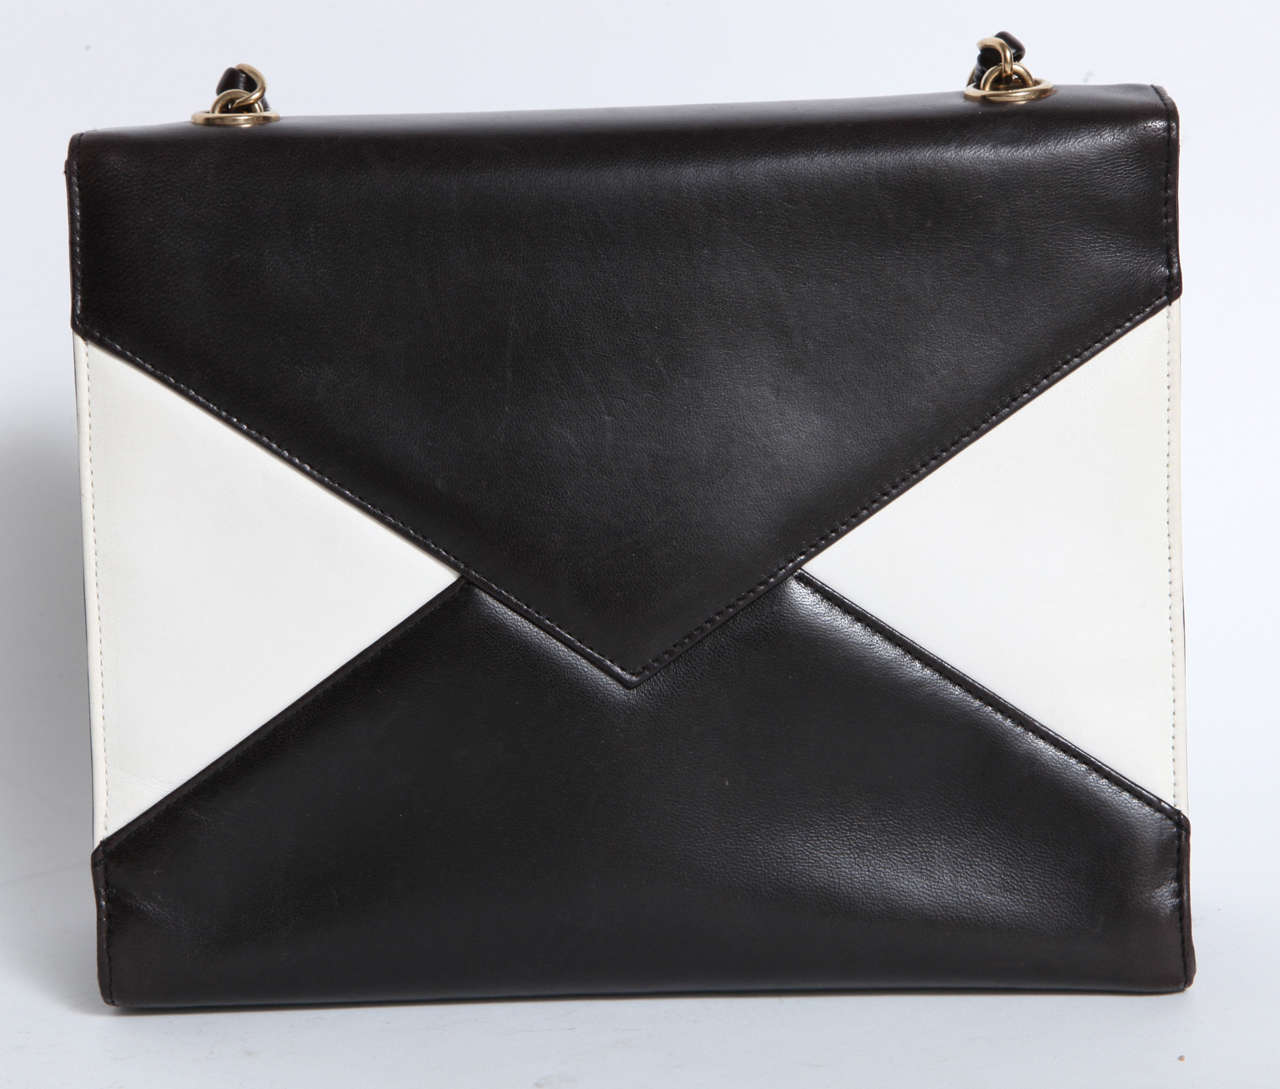 Mid-20th Century Vintage Chanel Black and White Handbag